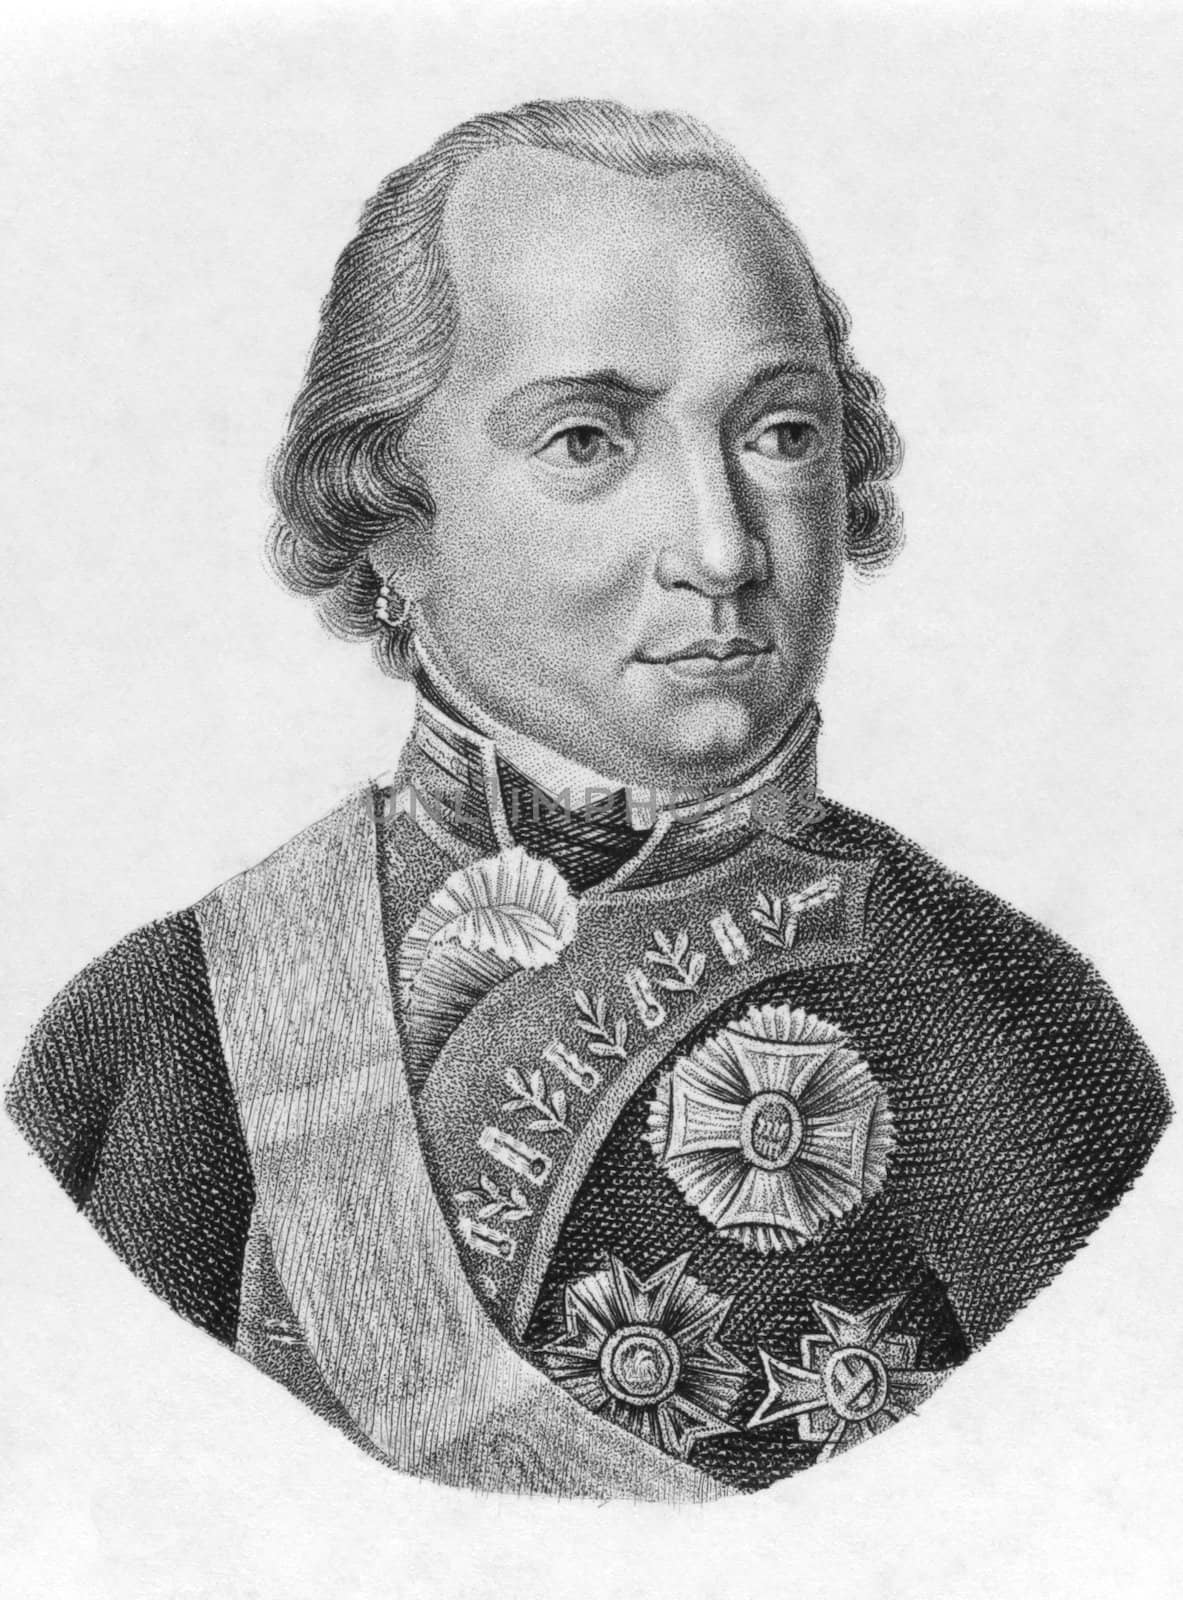 Maximilian I Joseph of Bavaria (1756-1825) on engraving from the 1800s. King of Bavaria during 1806-1825.